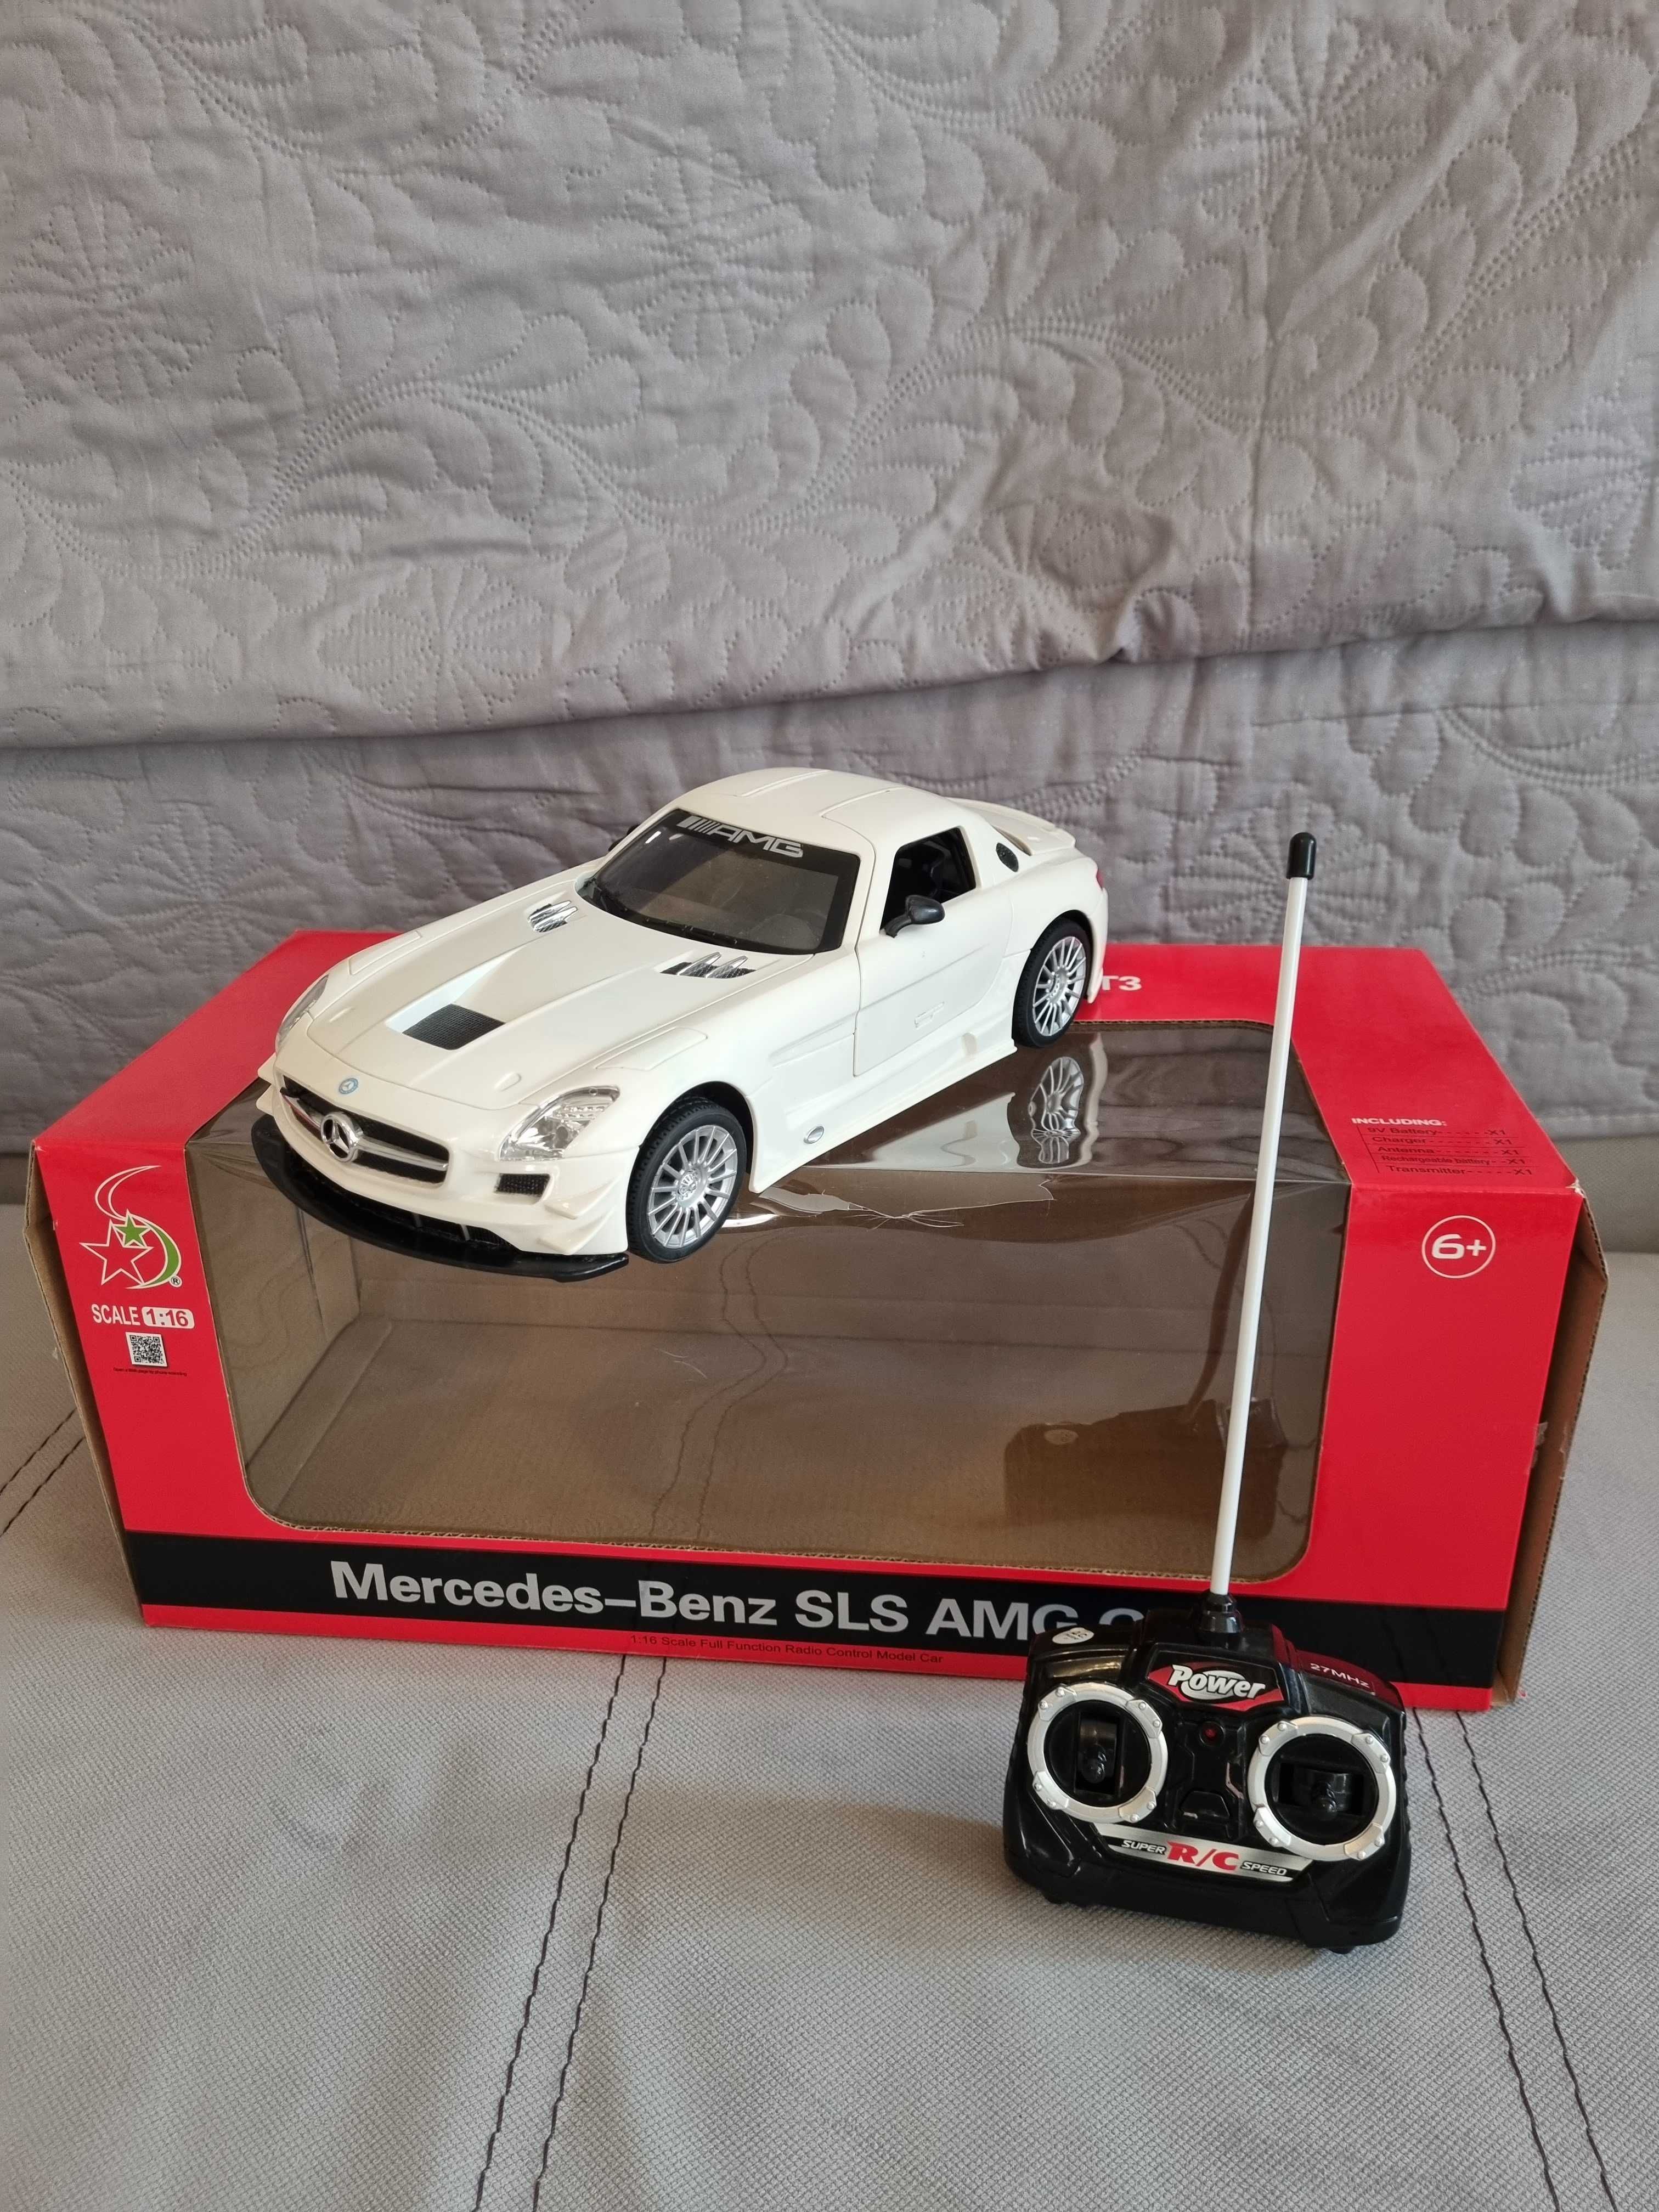 Masina cu telecomanda, scale 1:16, marca Mercedes-Benz, SLS AMG.